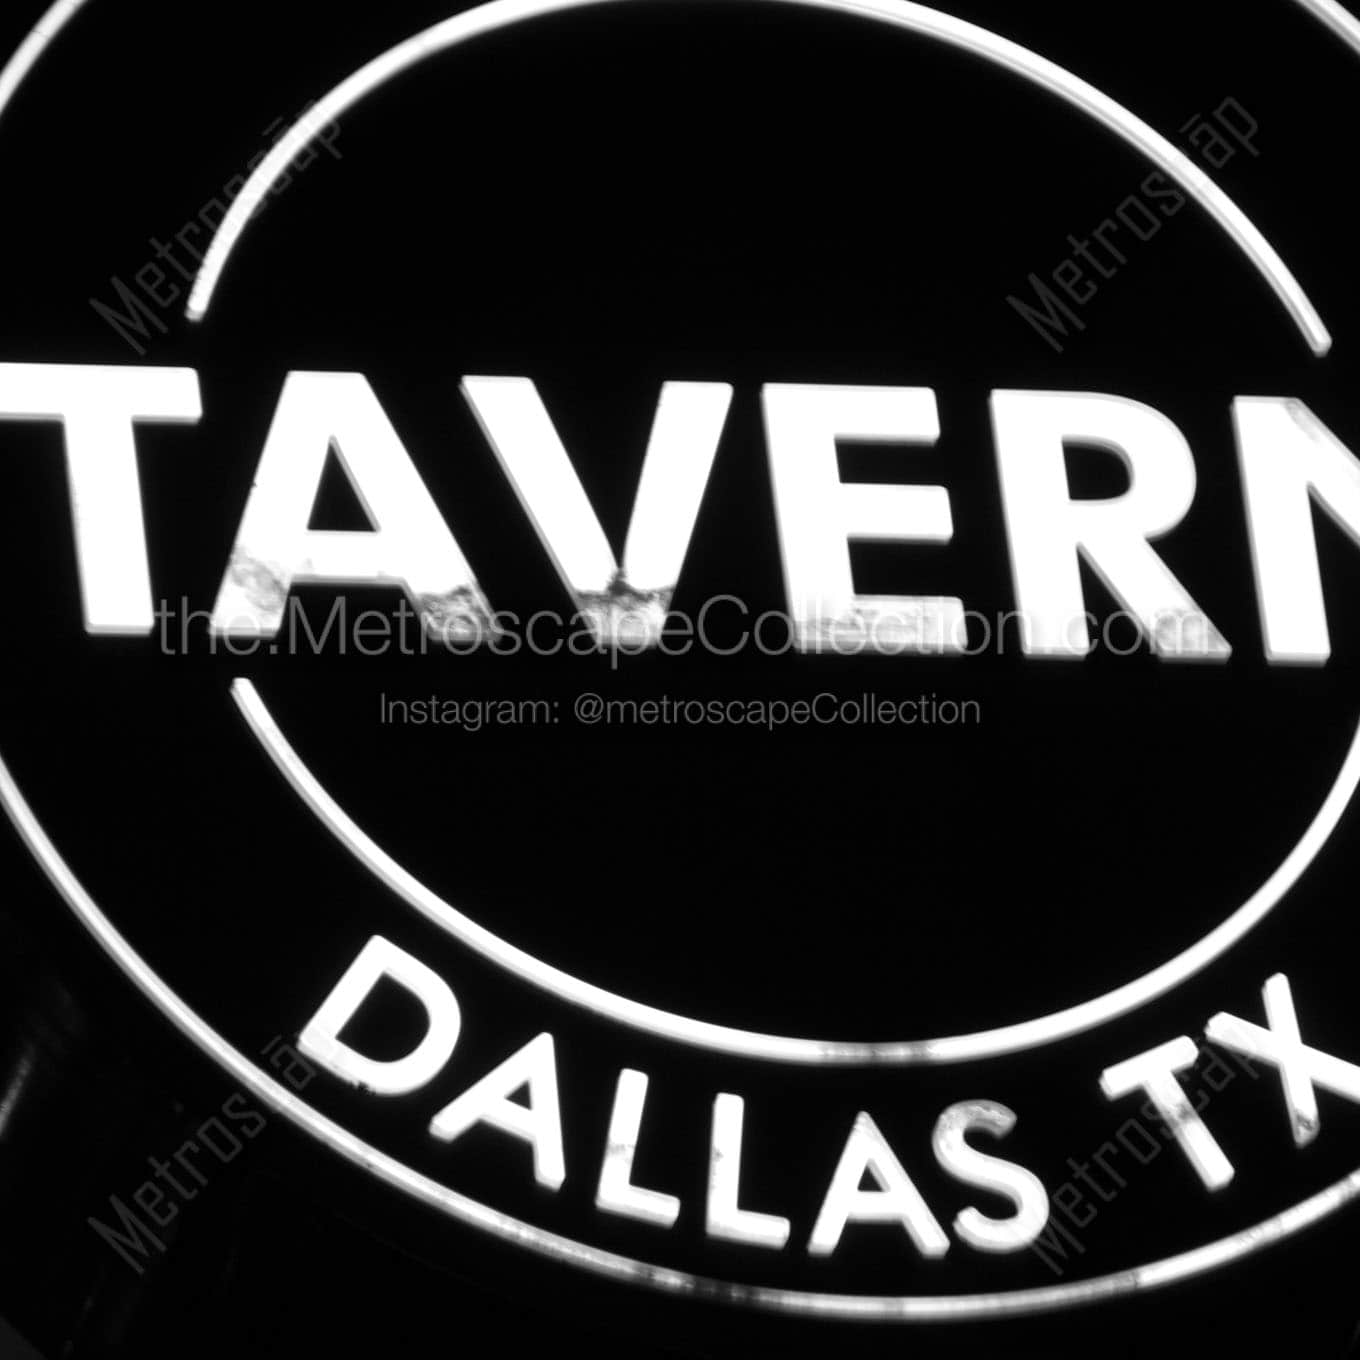 dallas texas tavern Black & White Office Art